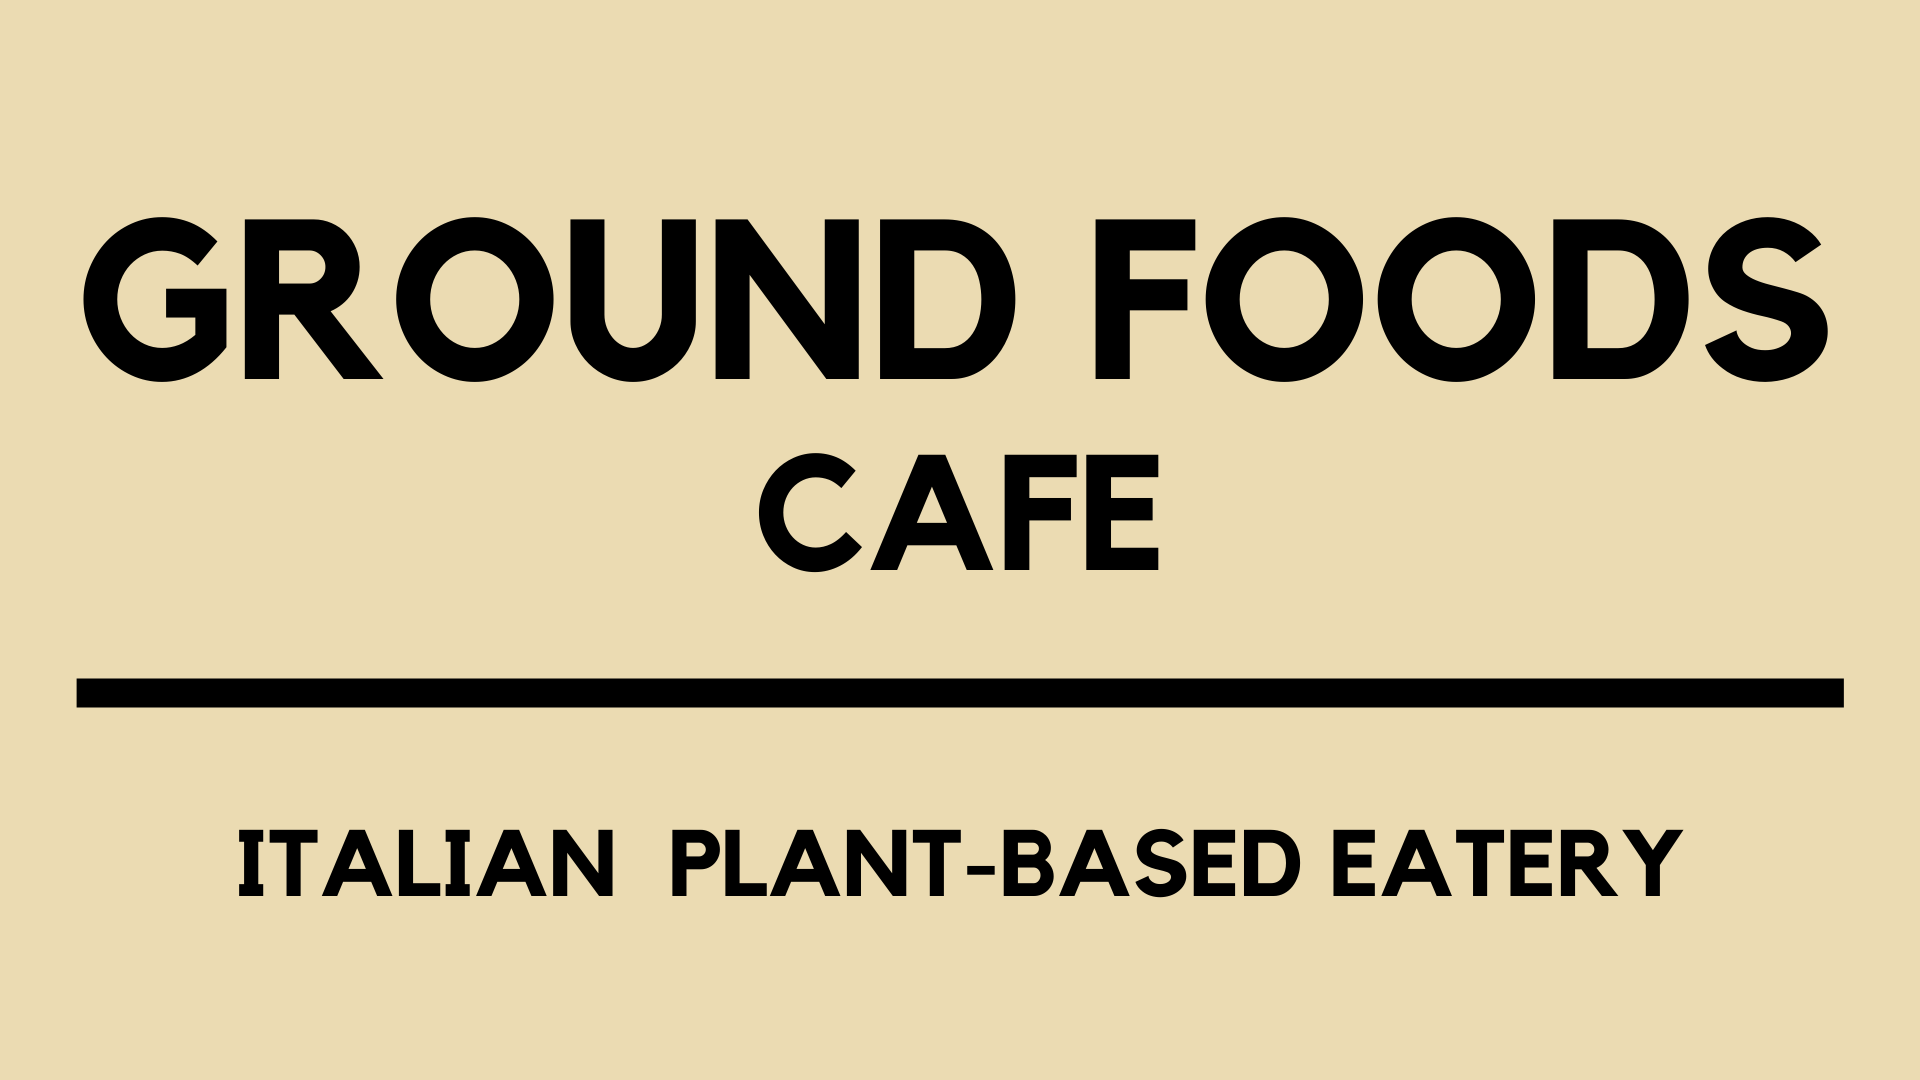 Ground Foods Cafe LLC